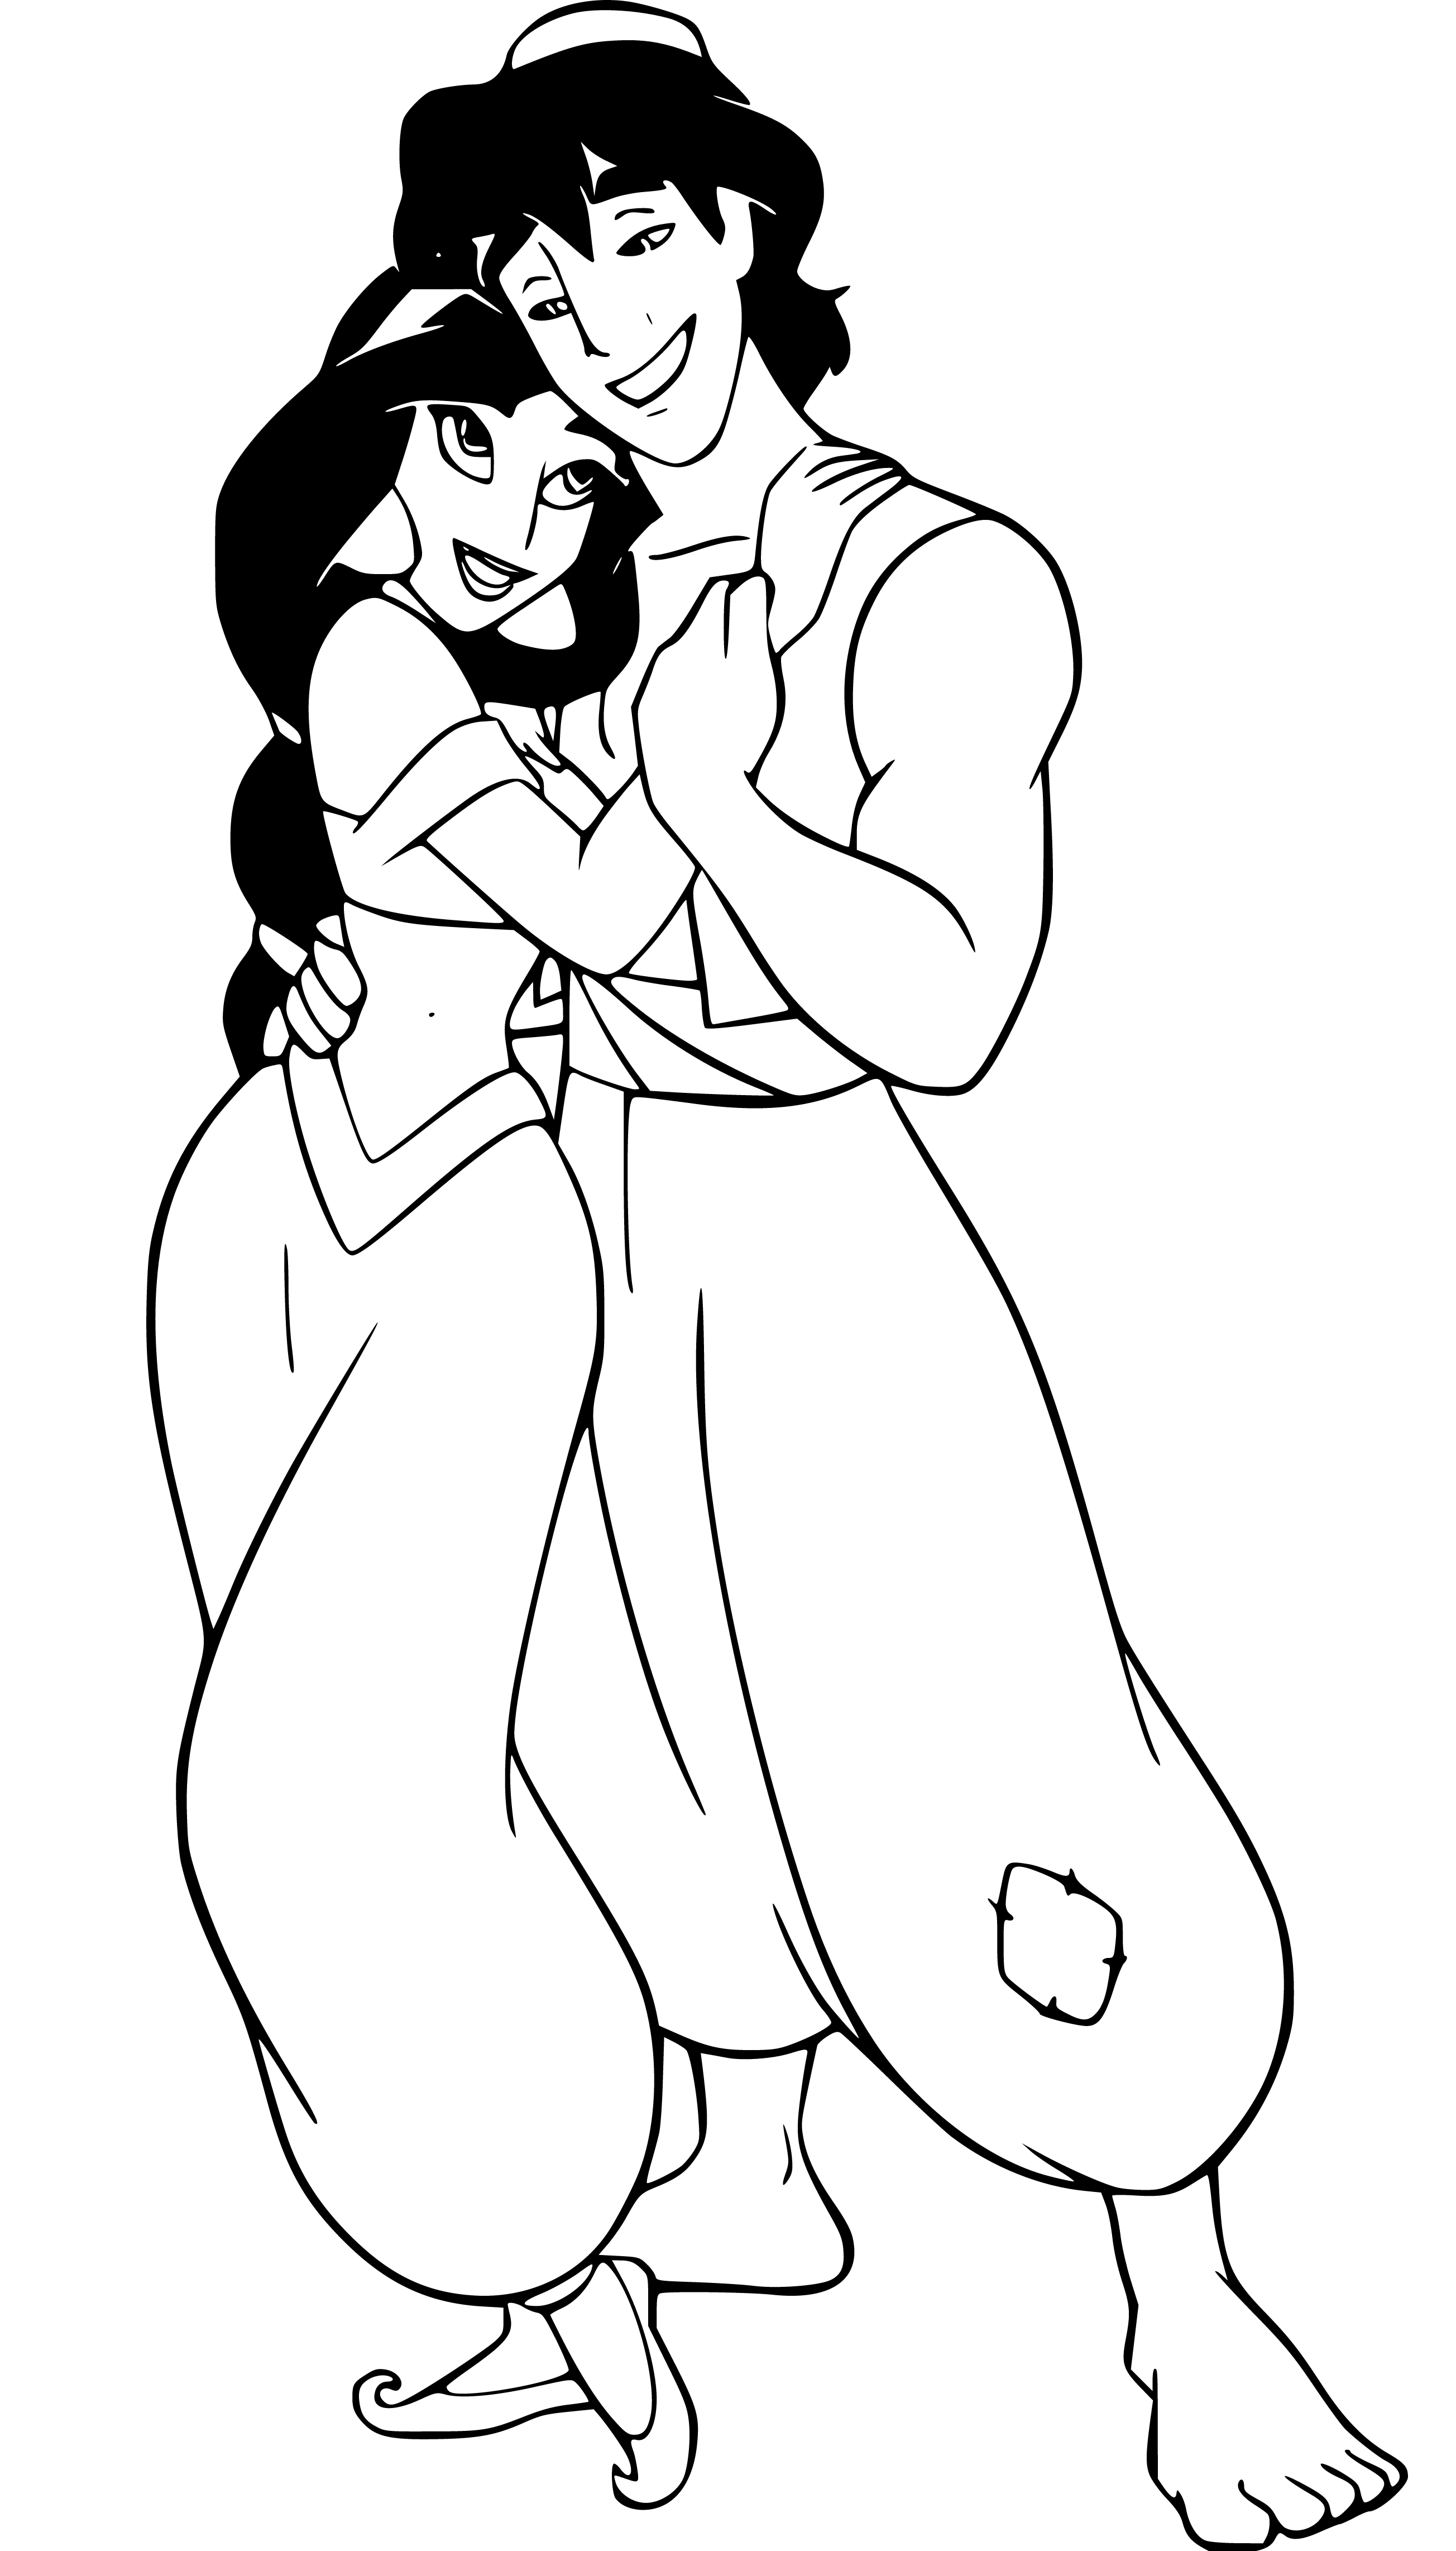 Aladdin hugging Jasmine Coloring Sheet - SheetalColor.com